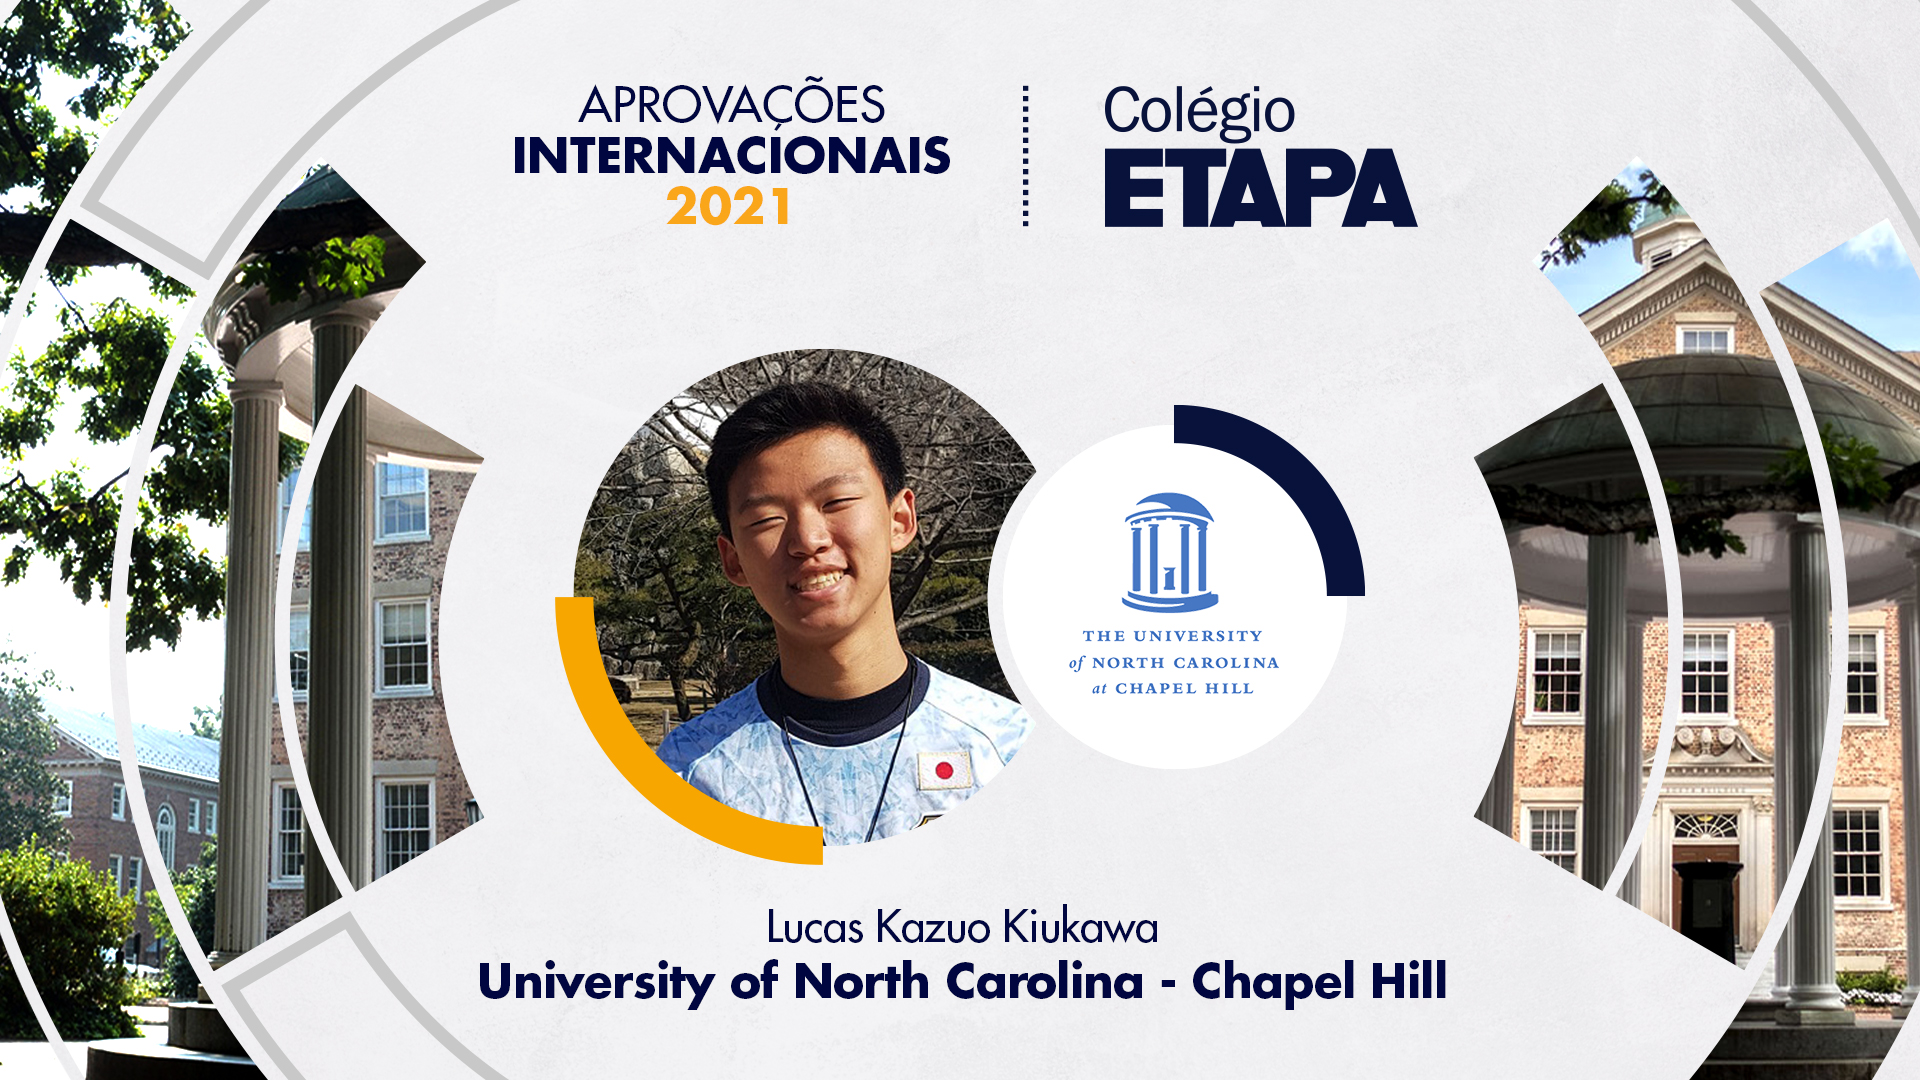 Lucas Kazuo Kiukawa vai estudar Engenharia Bioquímica na University of North Carolina – Chapel Hill.